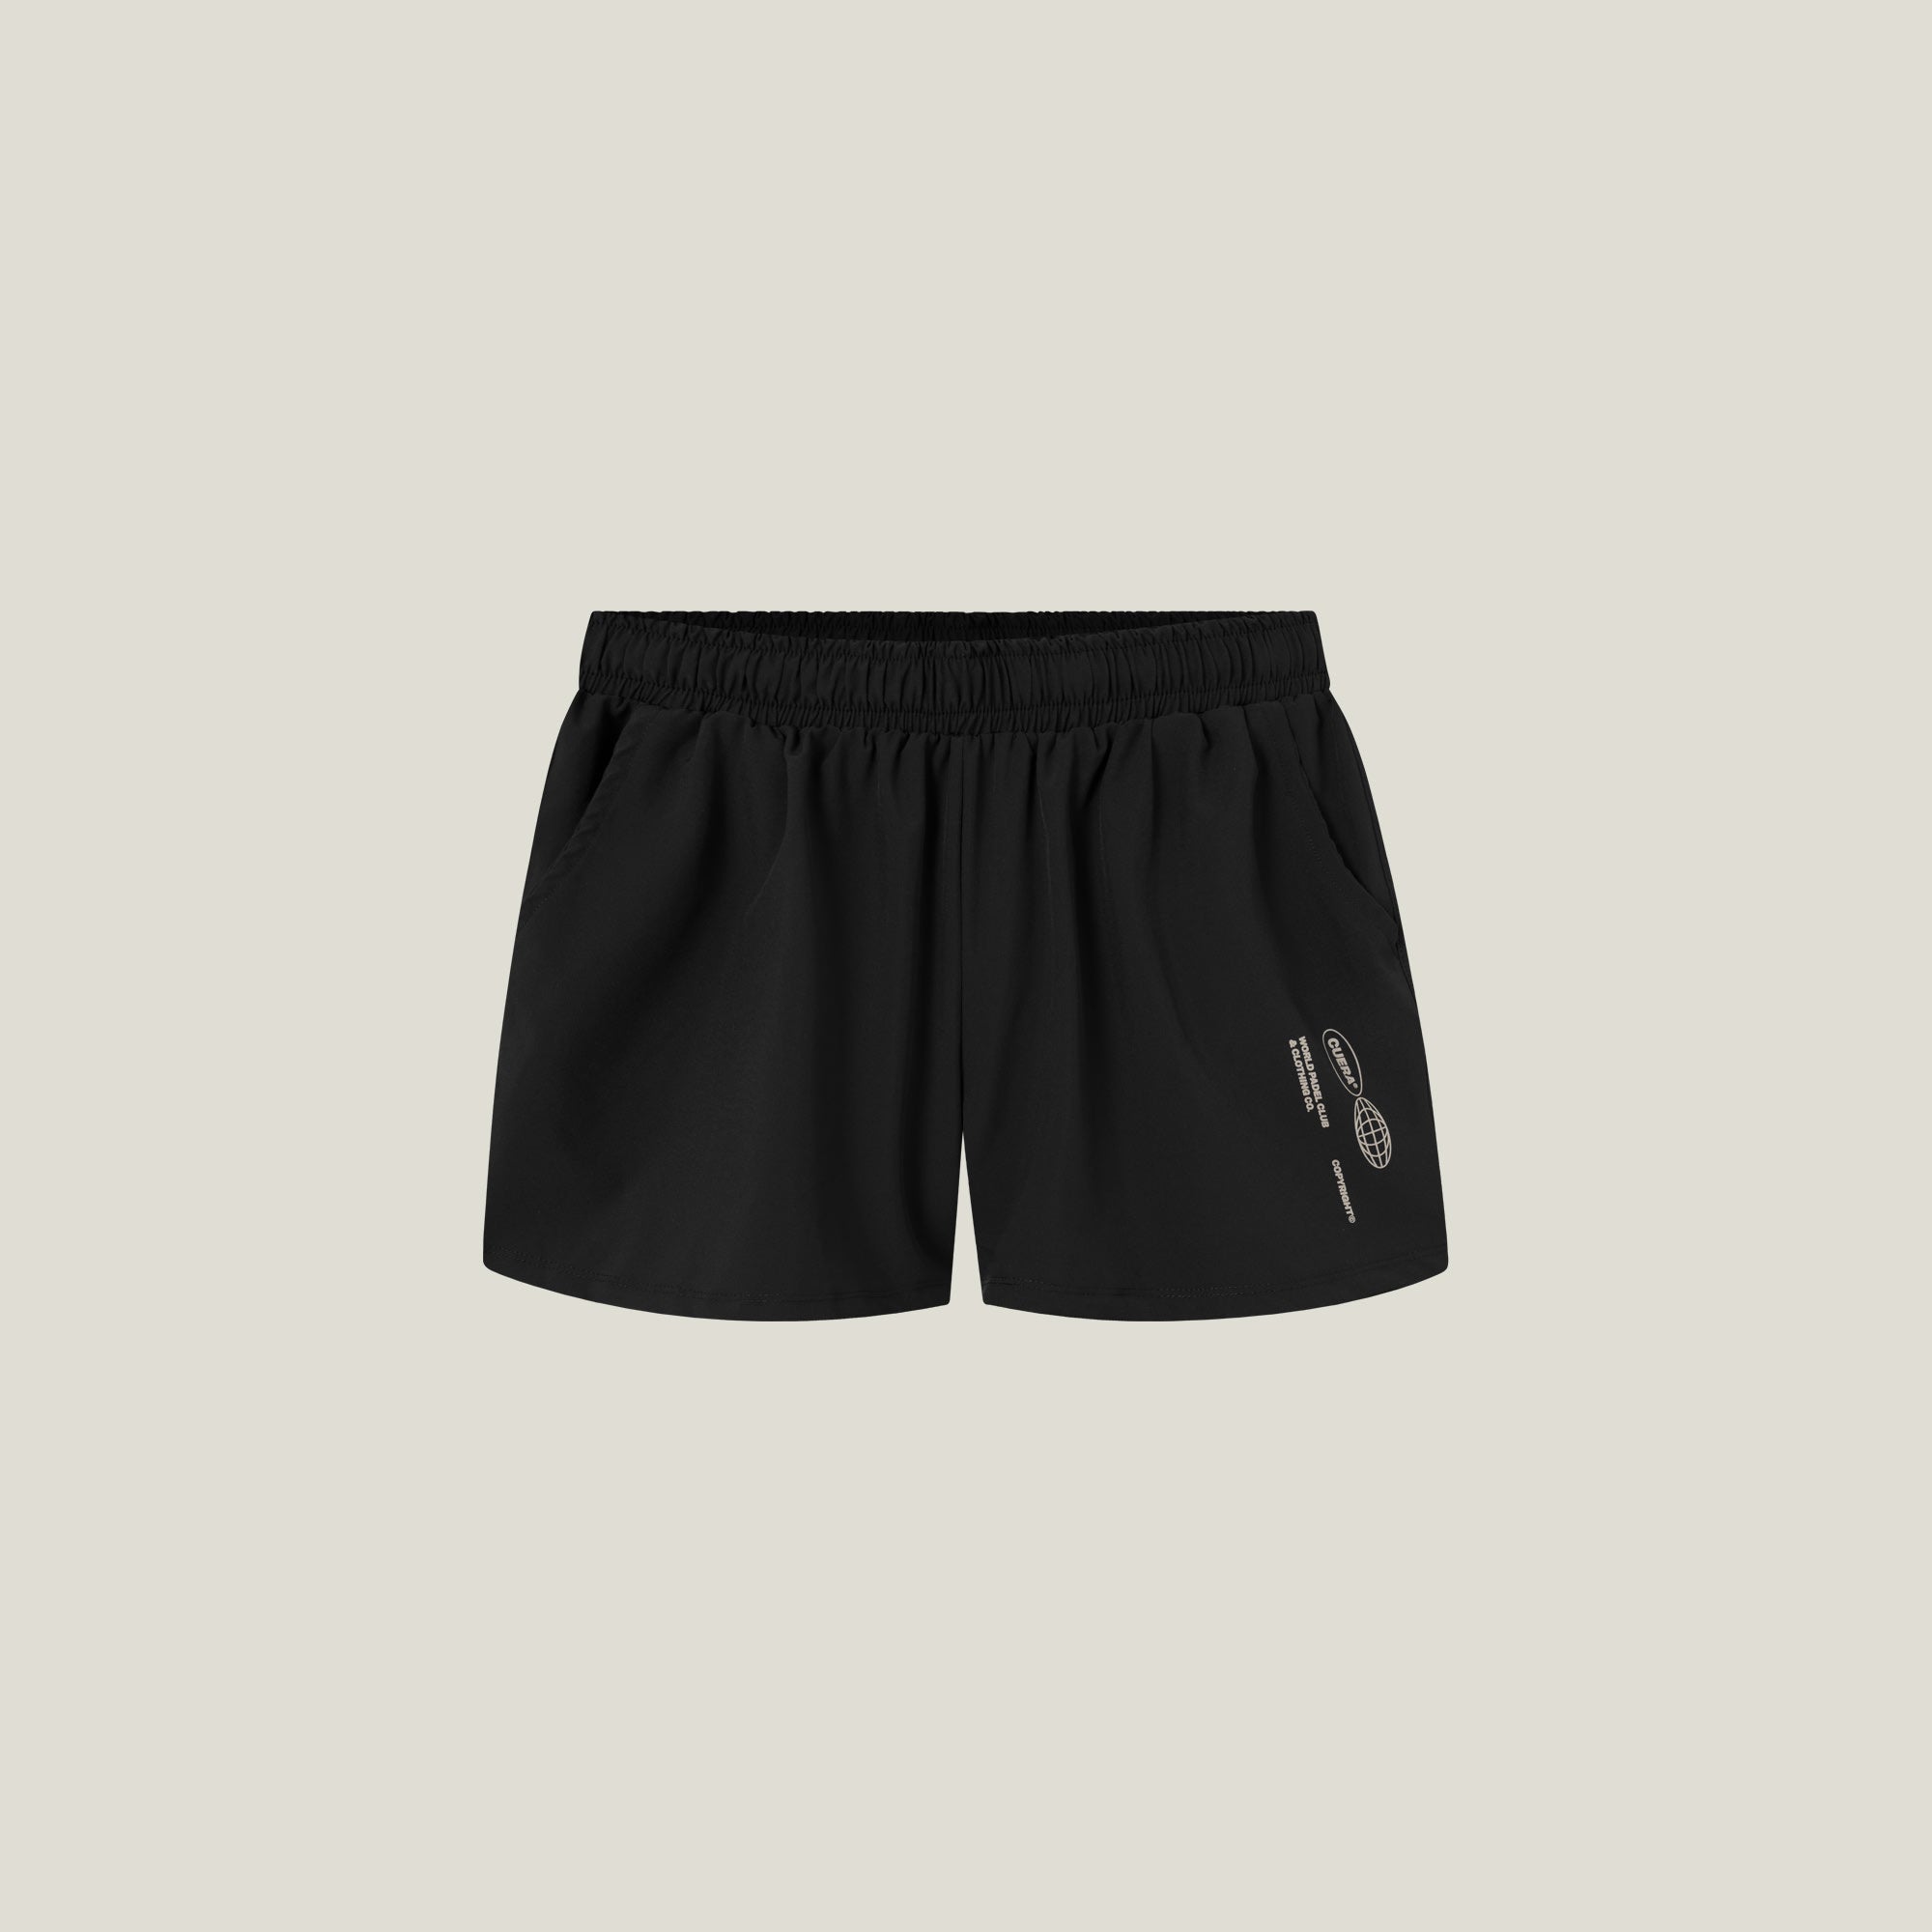 Womens Active Globe Shorts - Black